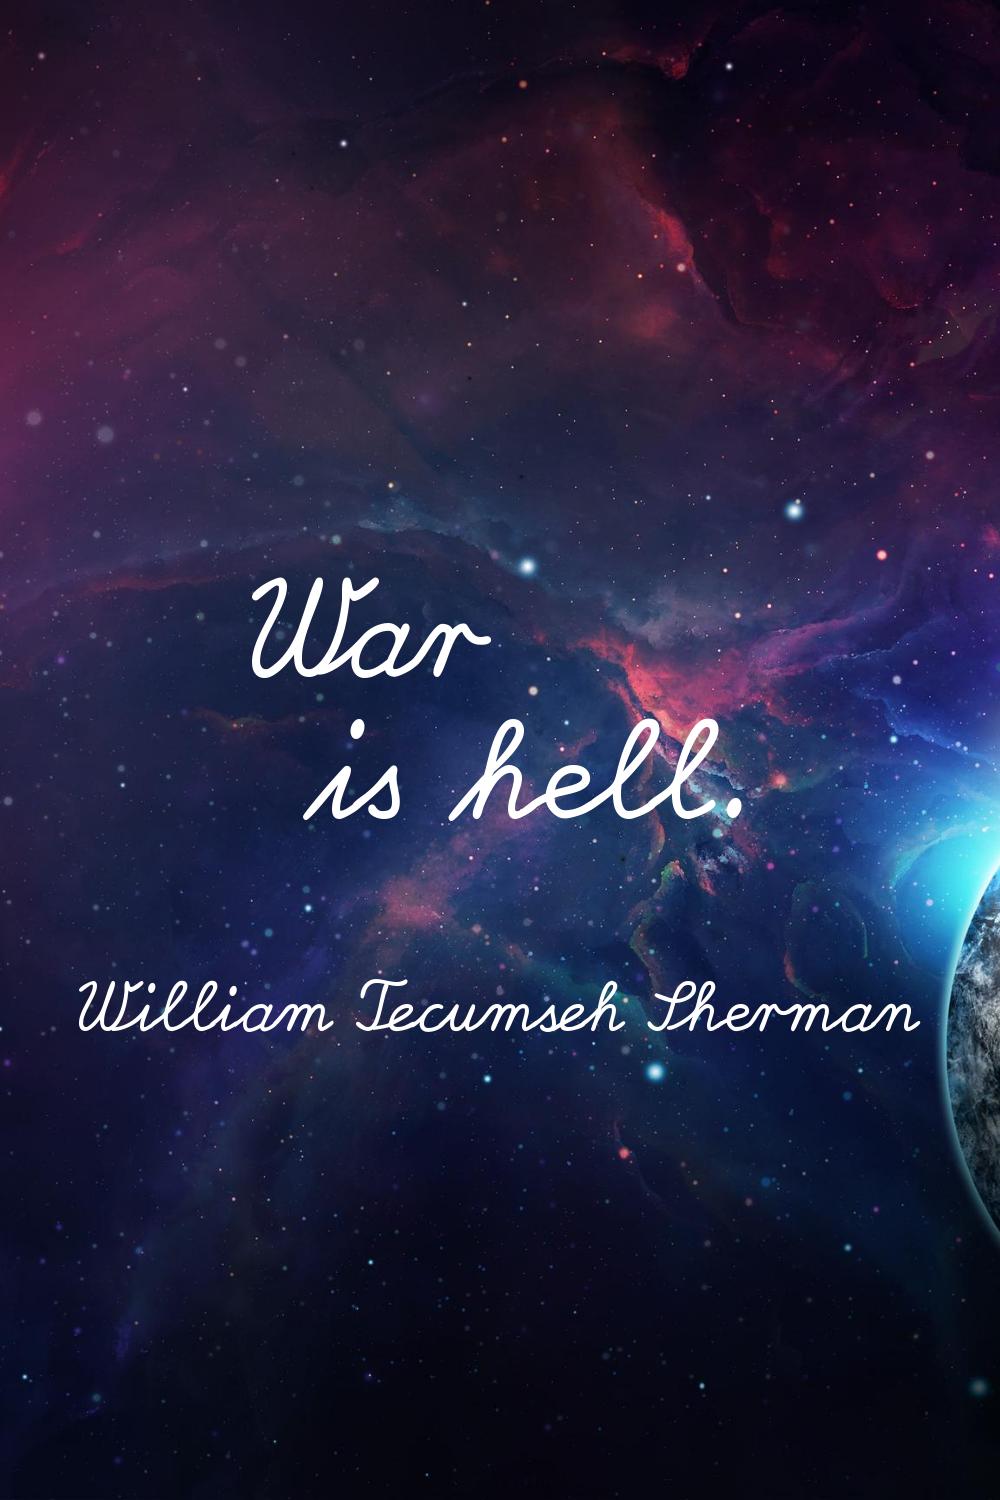 War is hell.